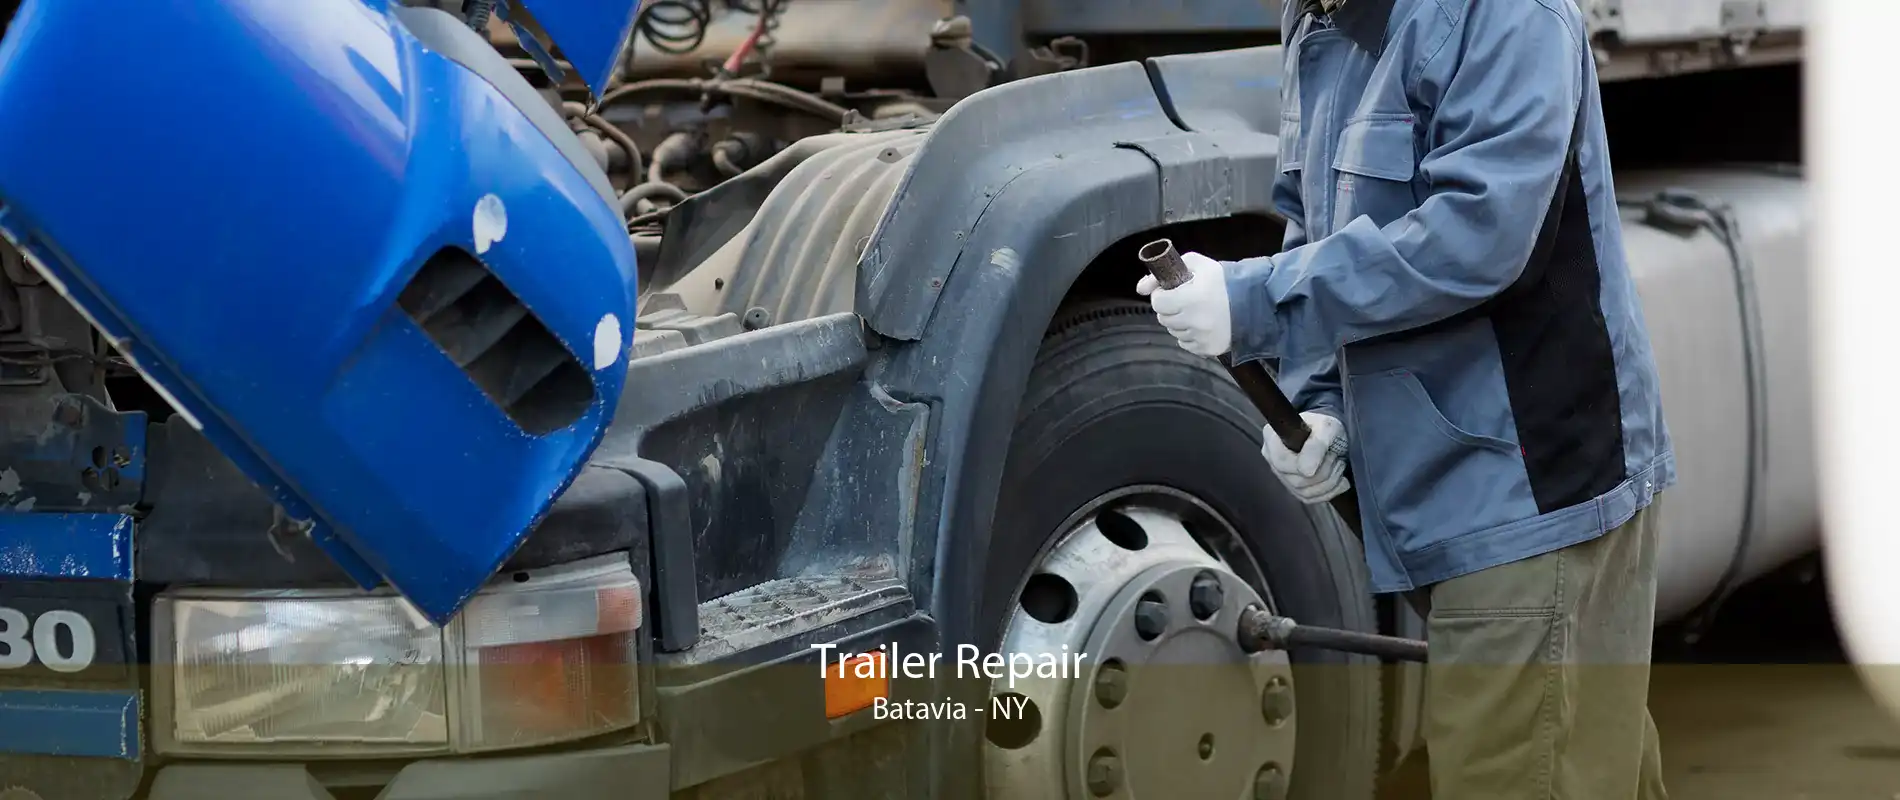 Trailer Repair Batavia - NY